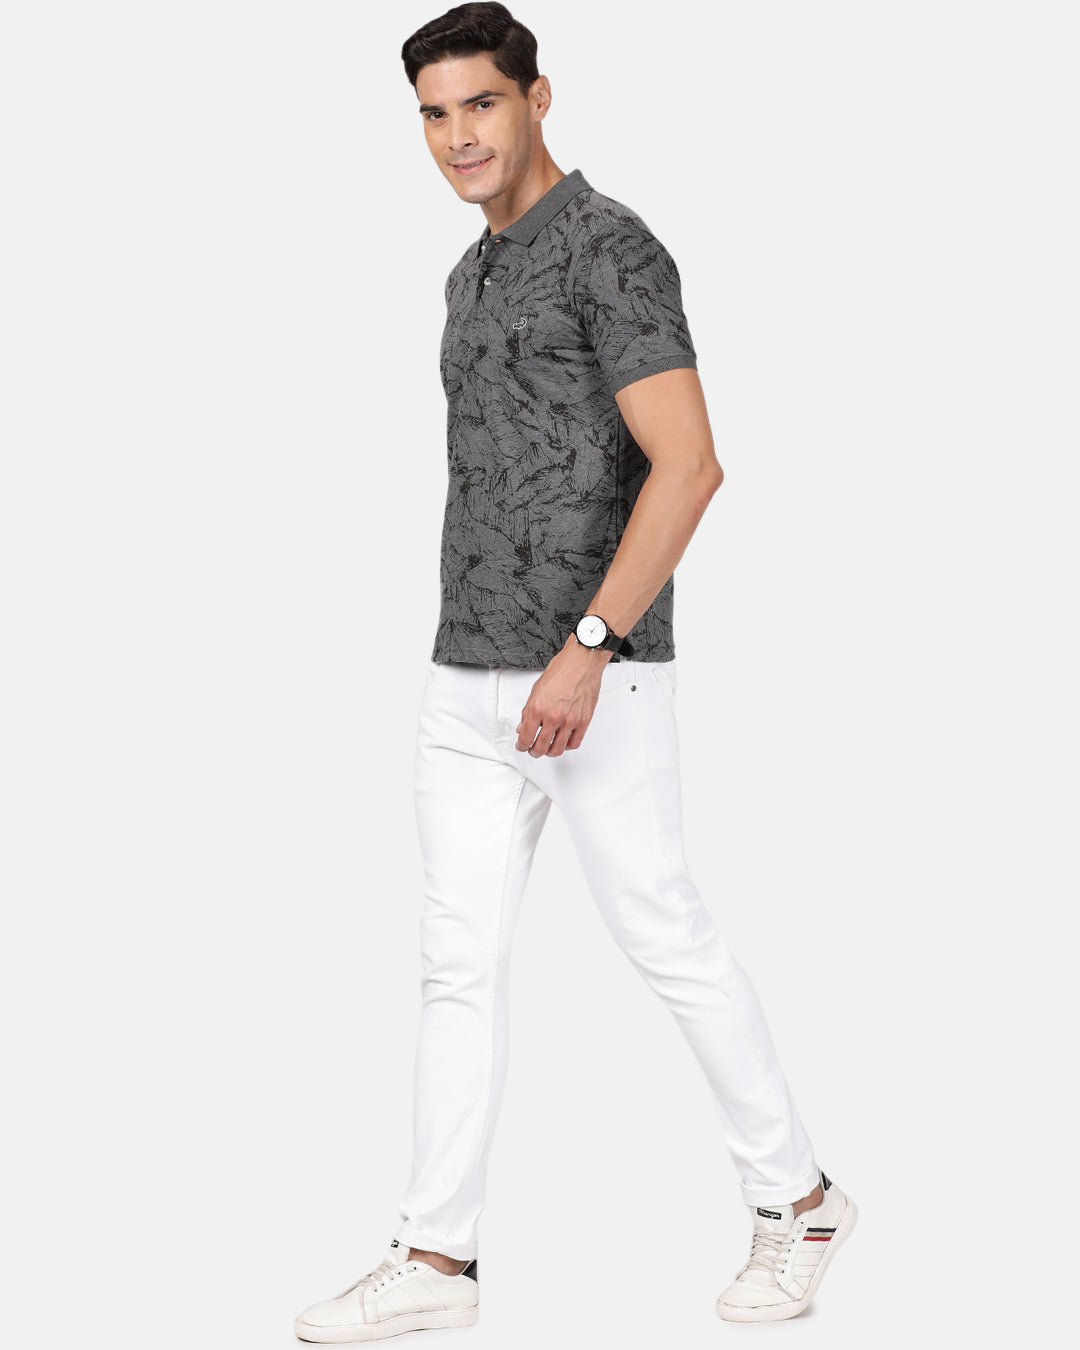 Crocodile Casual Slim Fit Printed Polo Neck Half Sleeve Charcoal Melange Tshirt